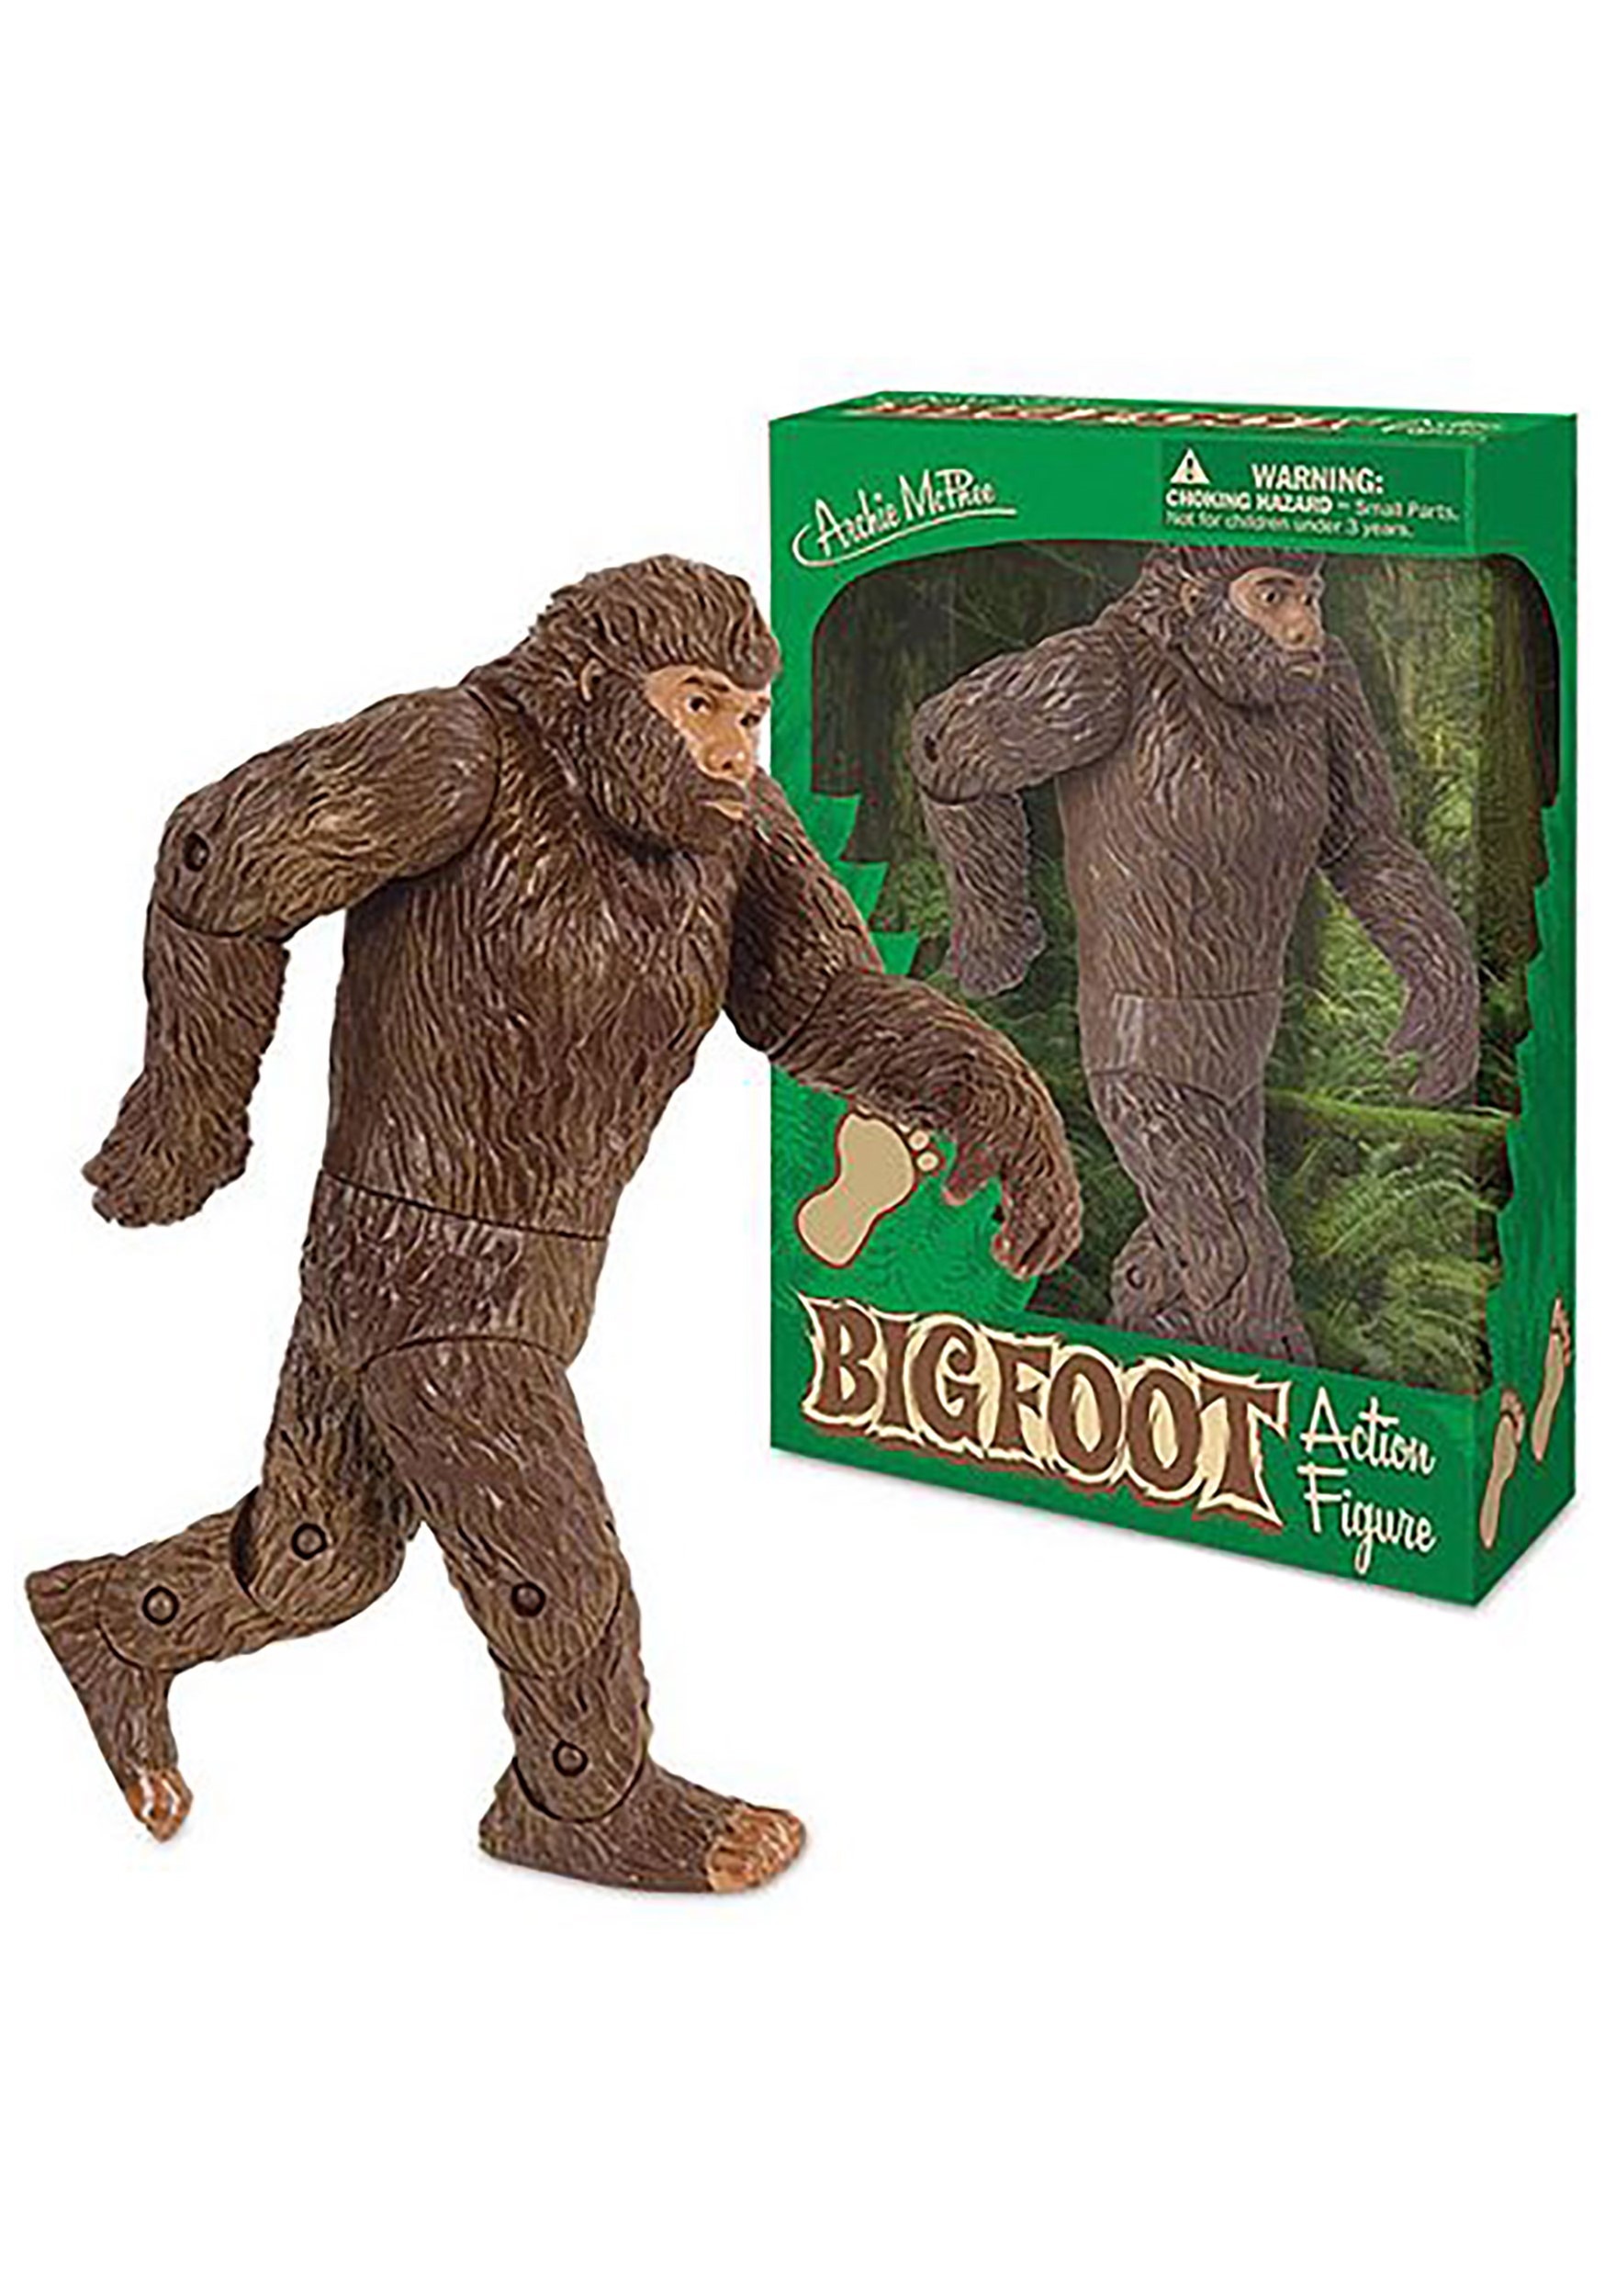 Archie McPhee Bigfoot Wild Action Figure